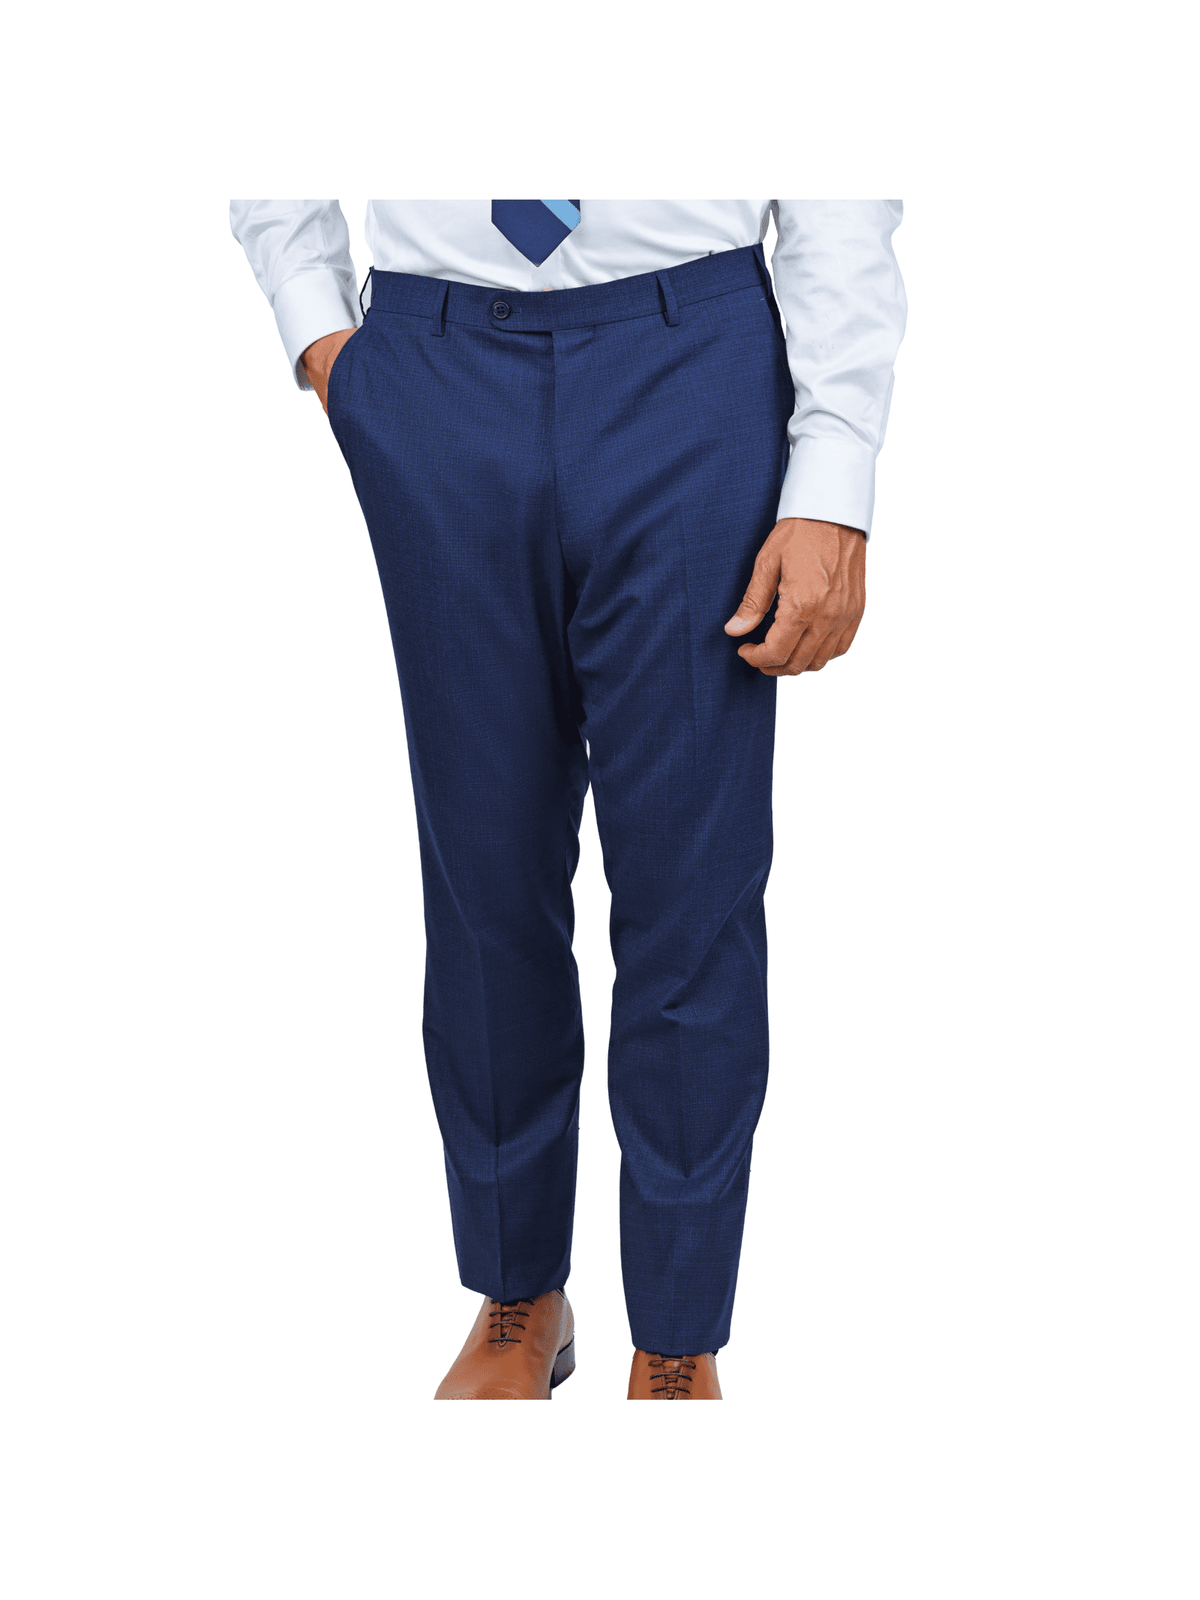 John Varvatos SUITS John Varvatos Mens Slim Fit Solid Blue Textured Two Button Wool Stretch Suit